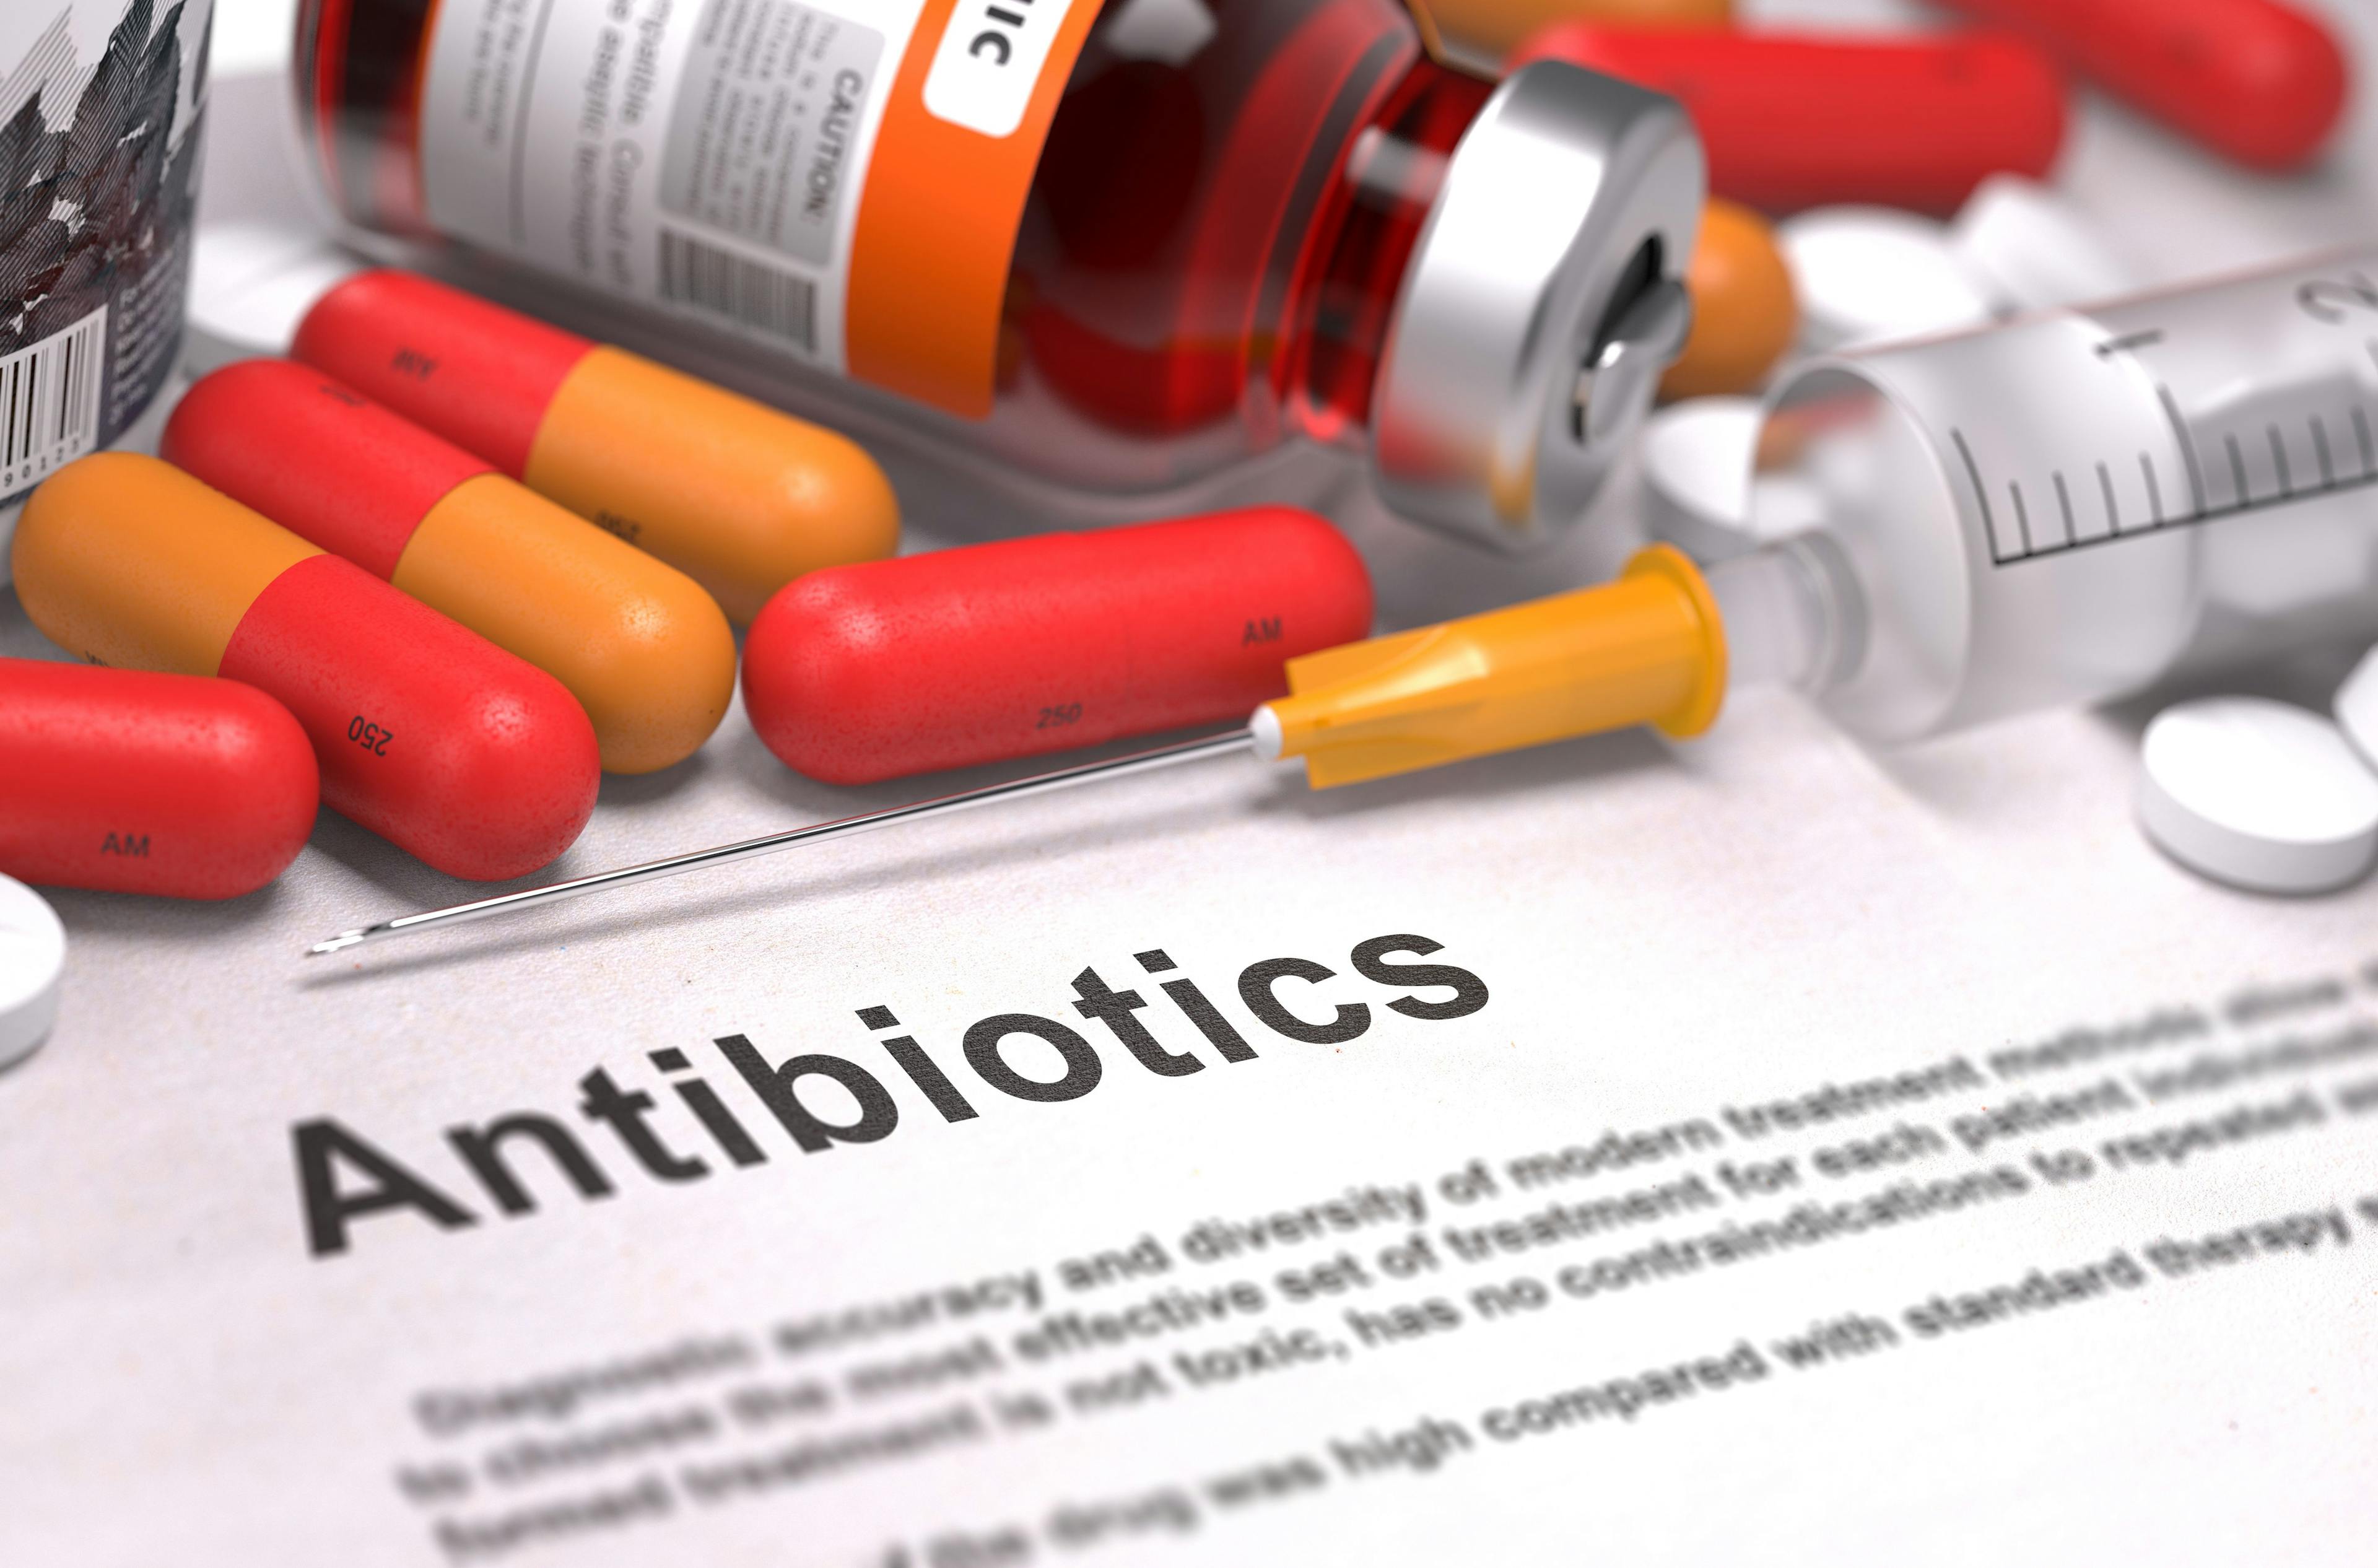 Use caution when prescribing antibiotics for common ailments